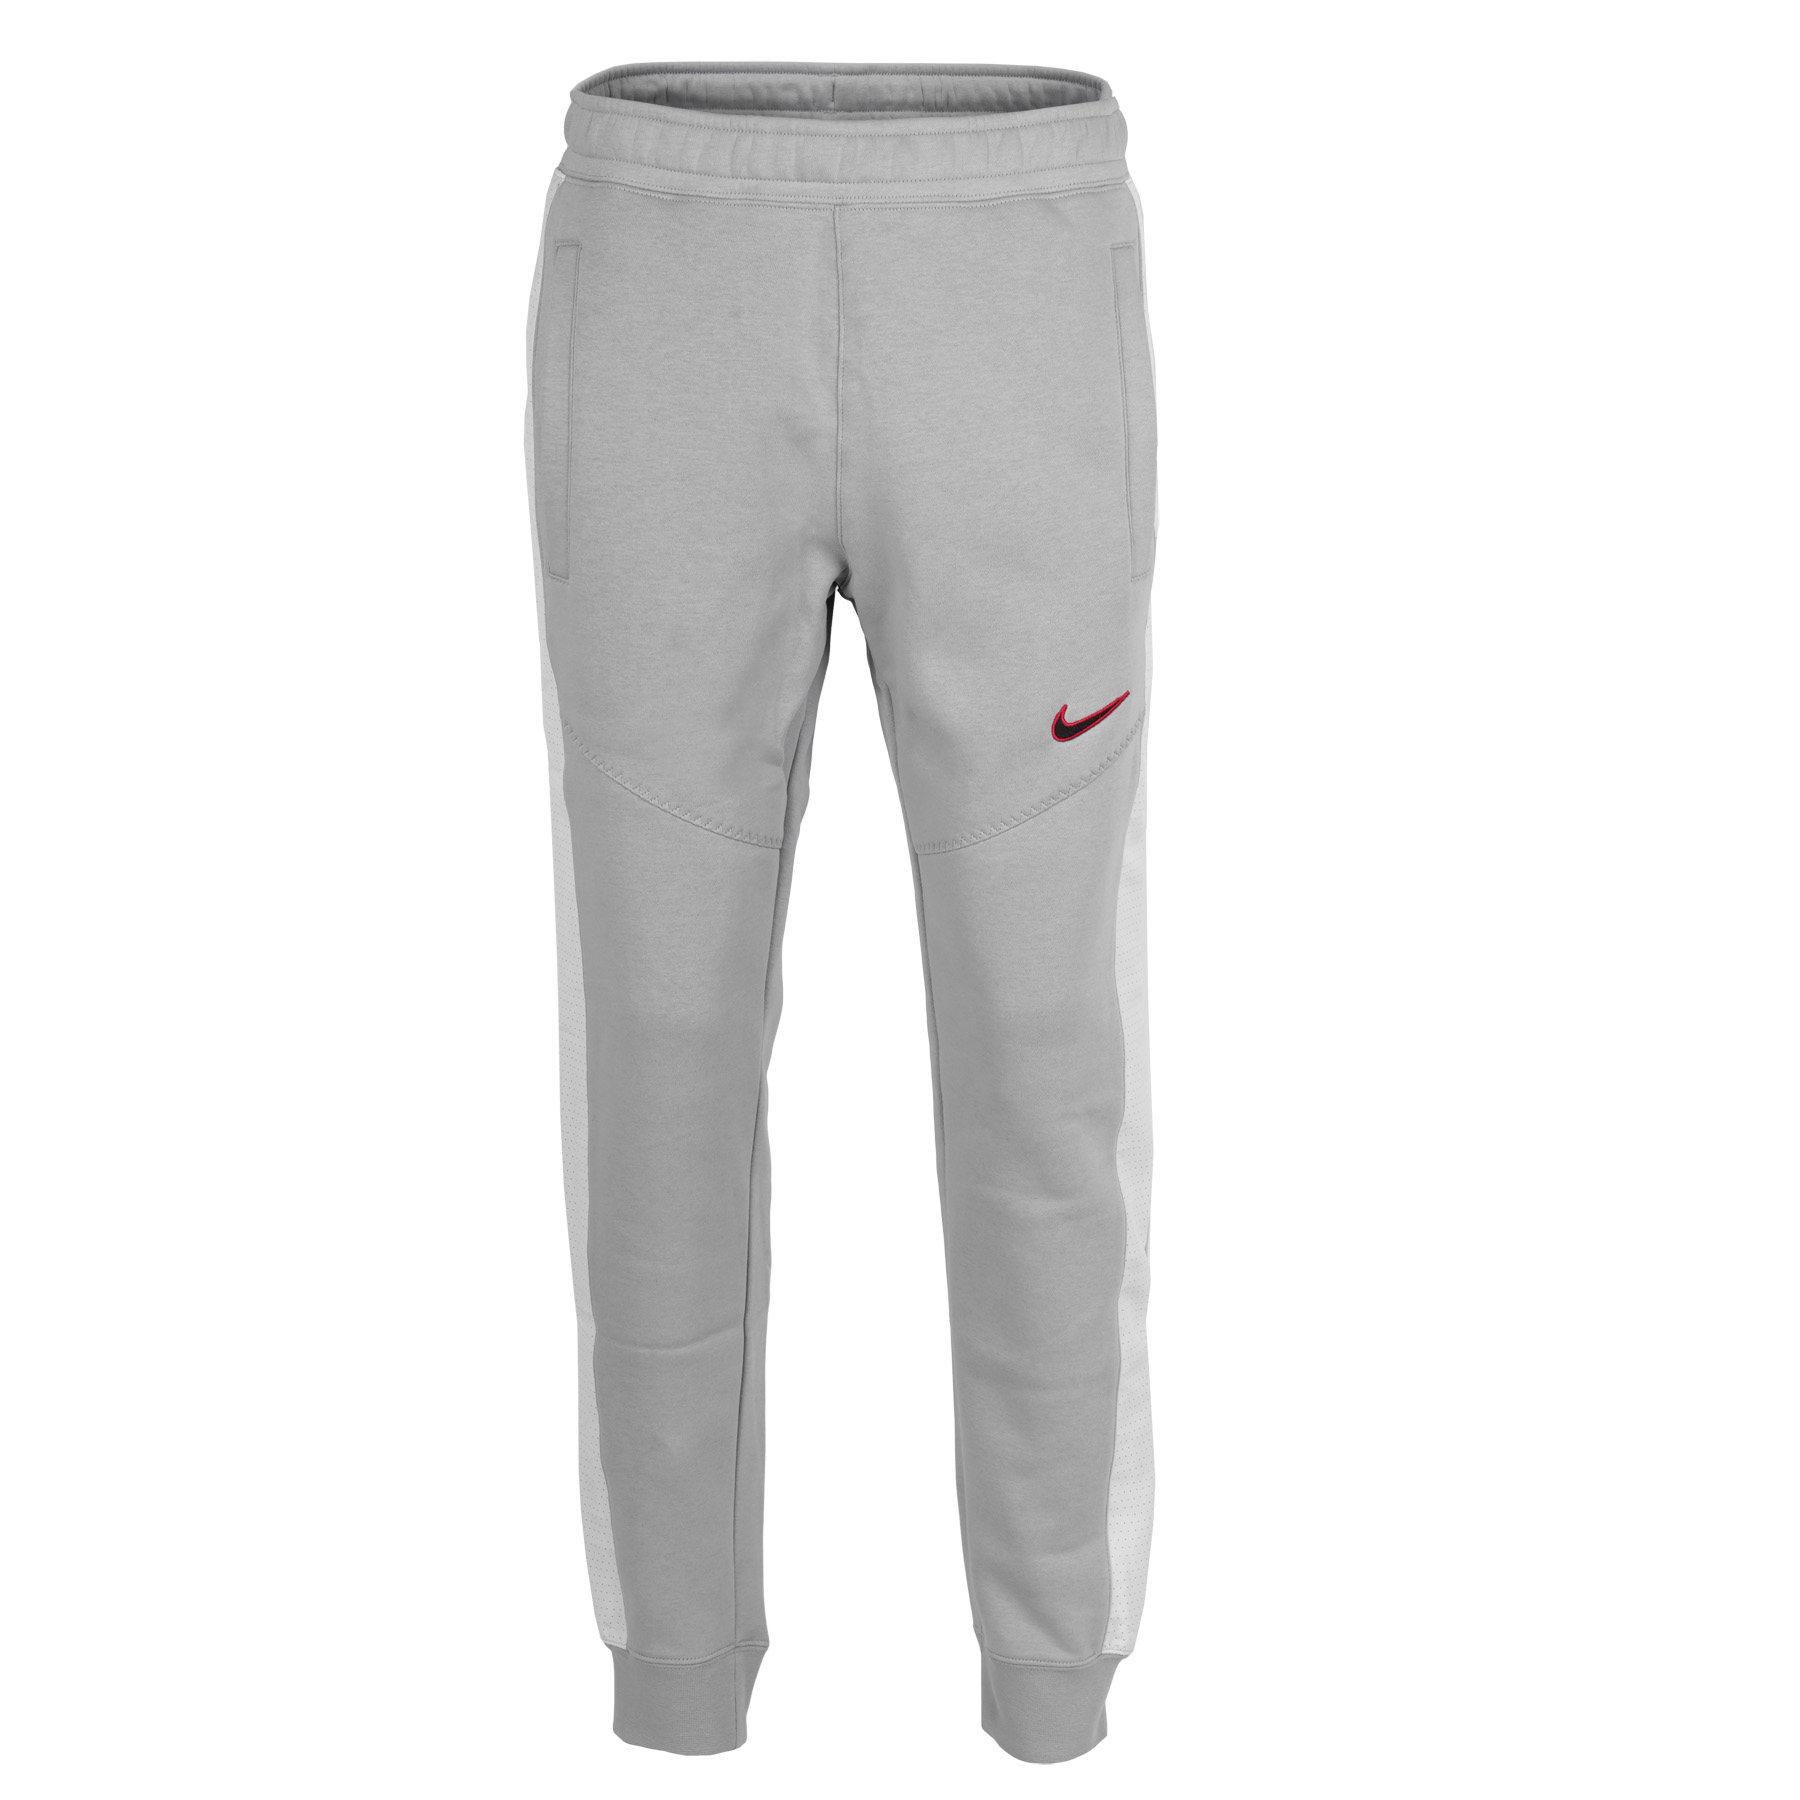 Immagine prodotto da Nike Pantaloni da Jogging Uomo - Sportswear Fleece - wolf grey FN0246-012